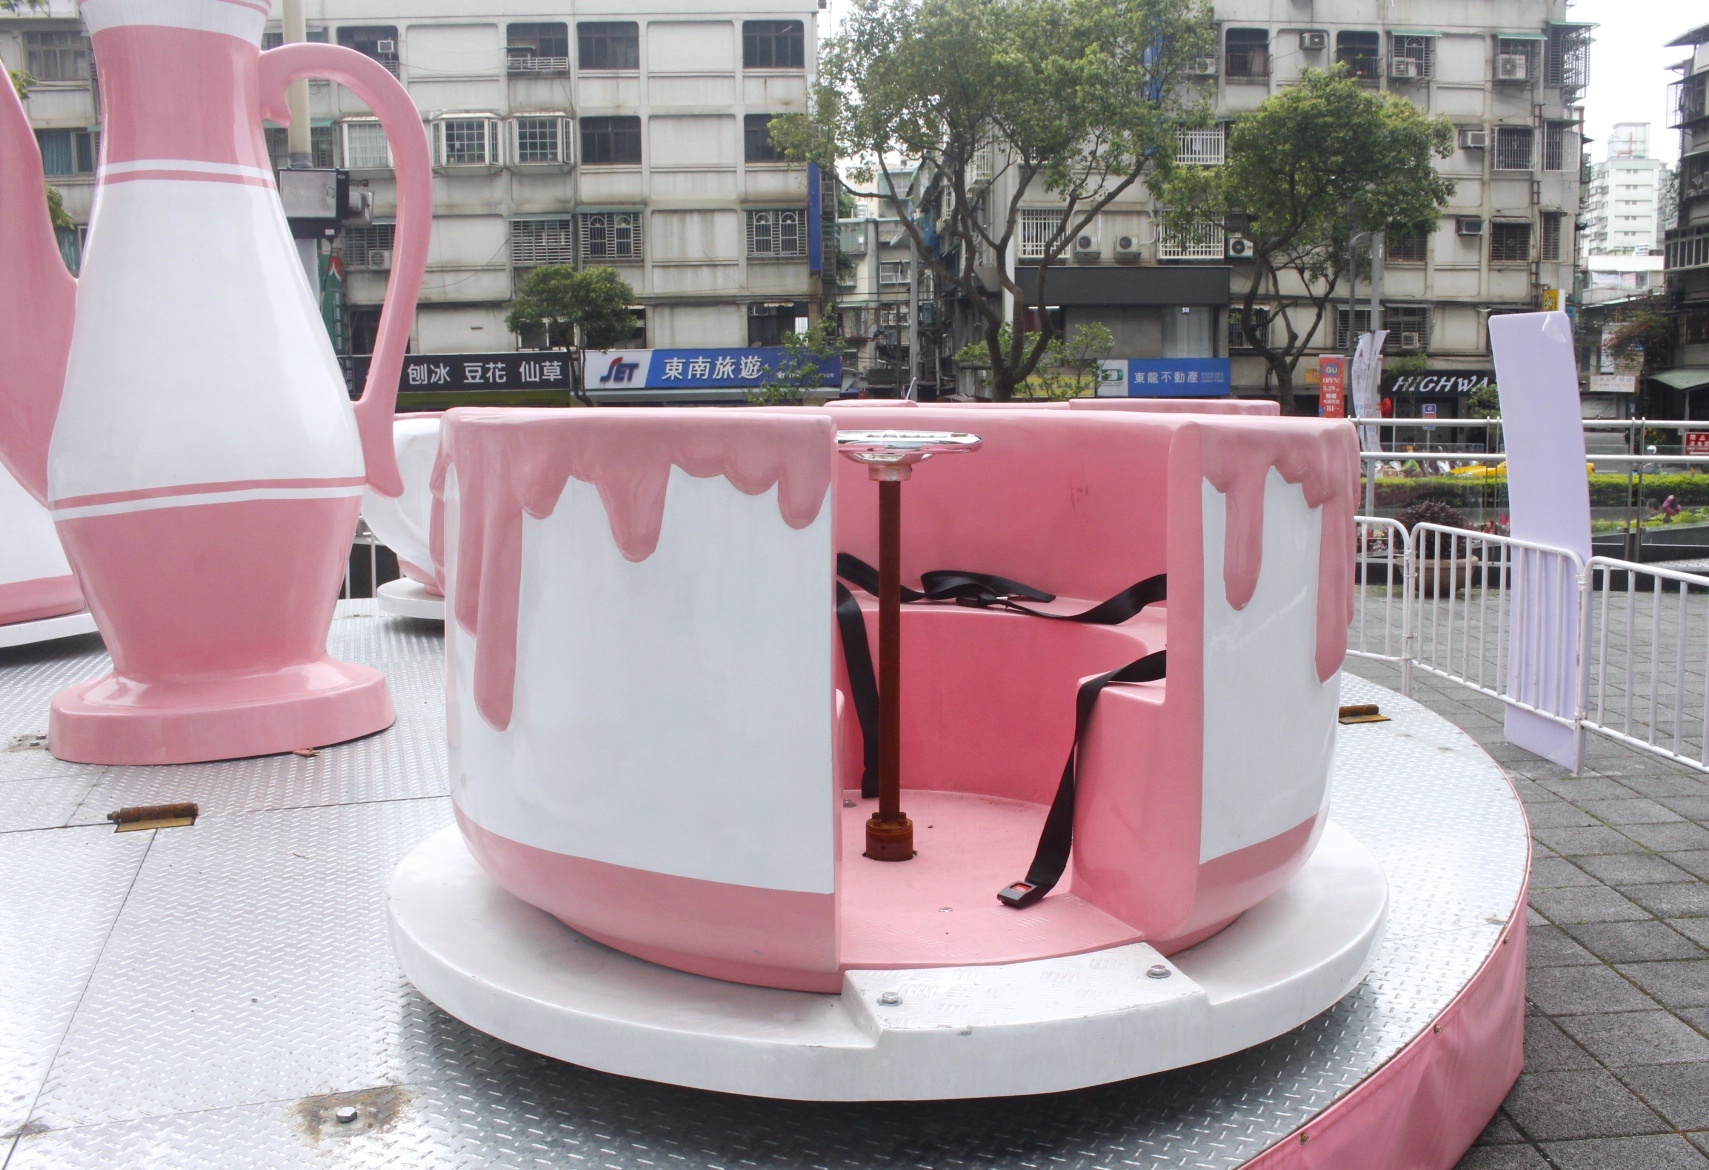 【新北 粉紅嘉年華 Pink Wonderland】遠百Mega City3/15-5/14。少女心噴發的粉紅樂園